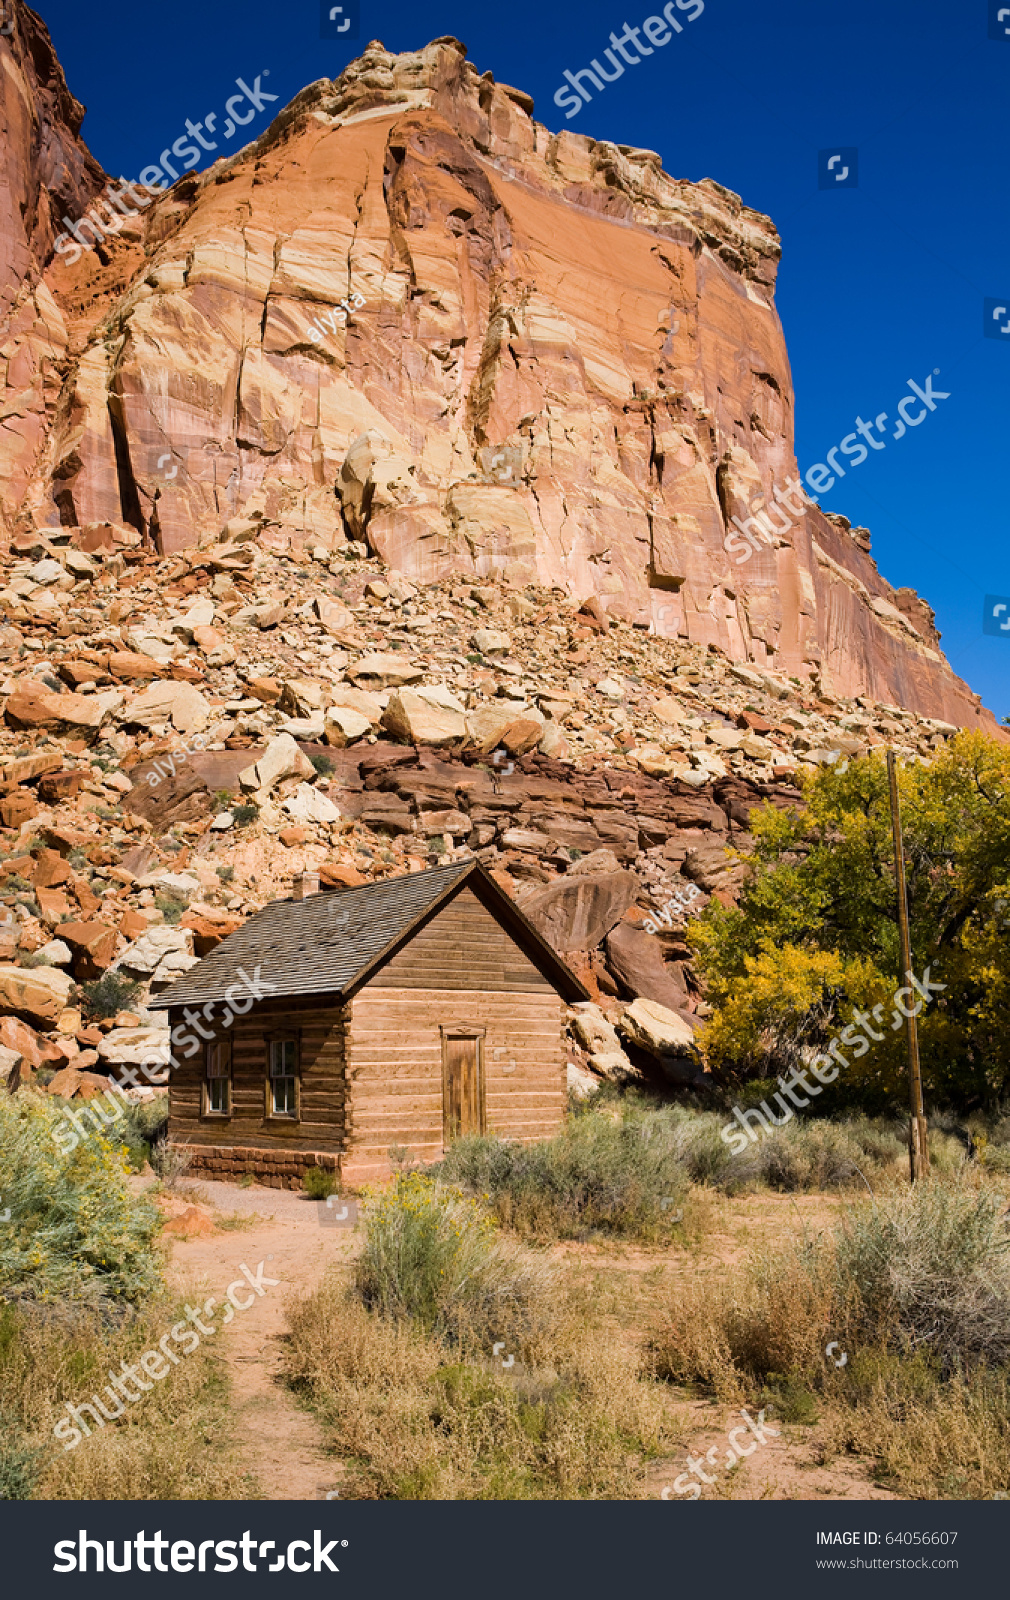 Early Wood Pioneer One Room Schoolhouse In The Desert Of 